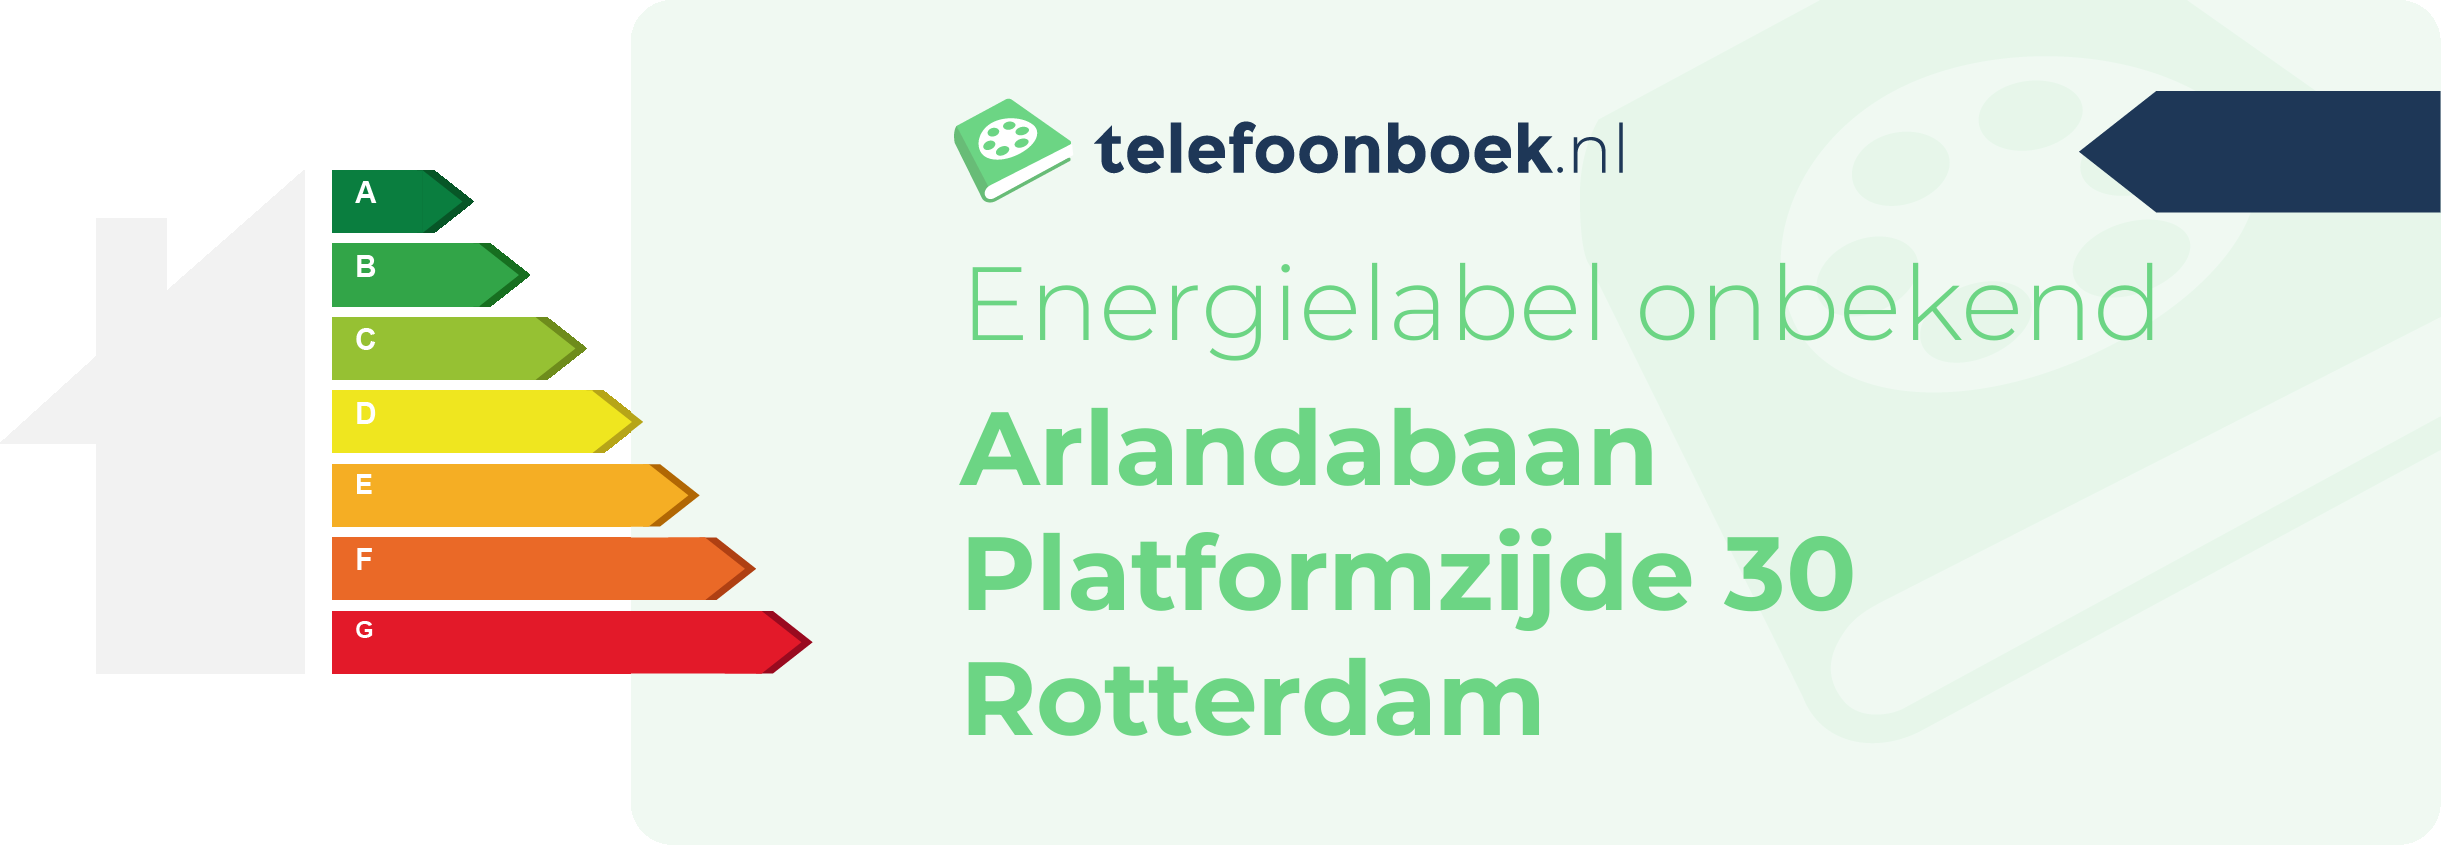 Energielabel Arlandabaan Platformzijde 30 Rotterdam